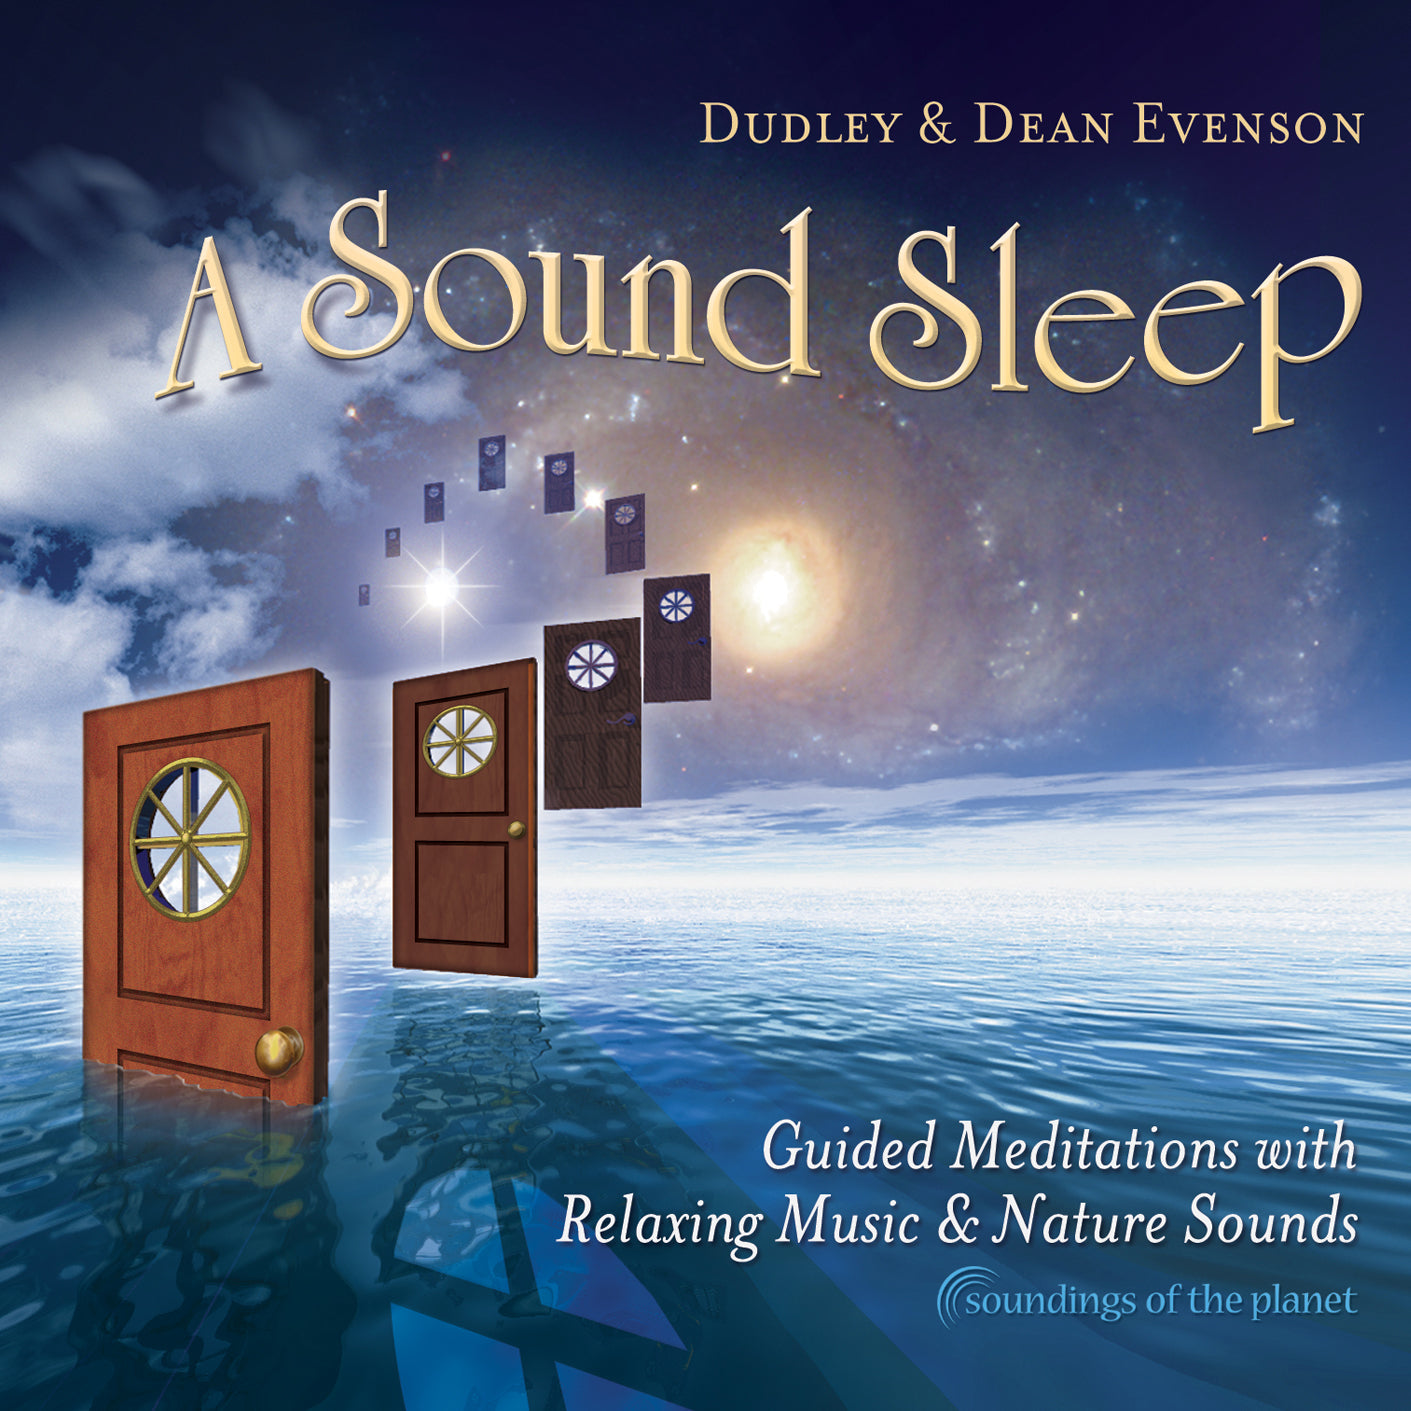 Soundings_SP-7126_Sound Sleep_Dudley and Dean Evenson